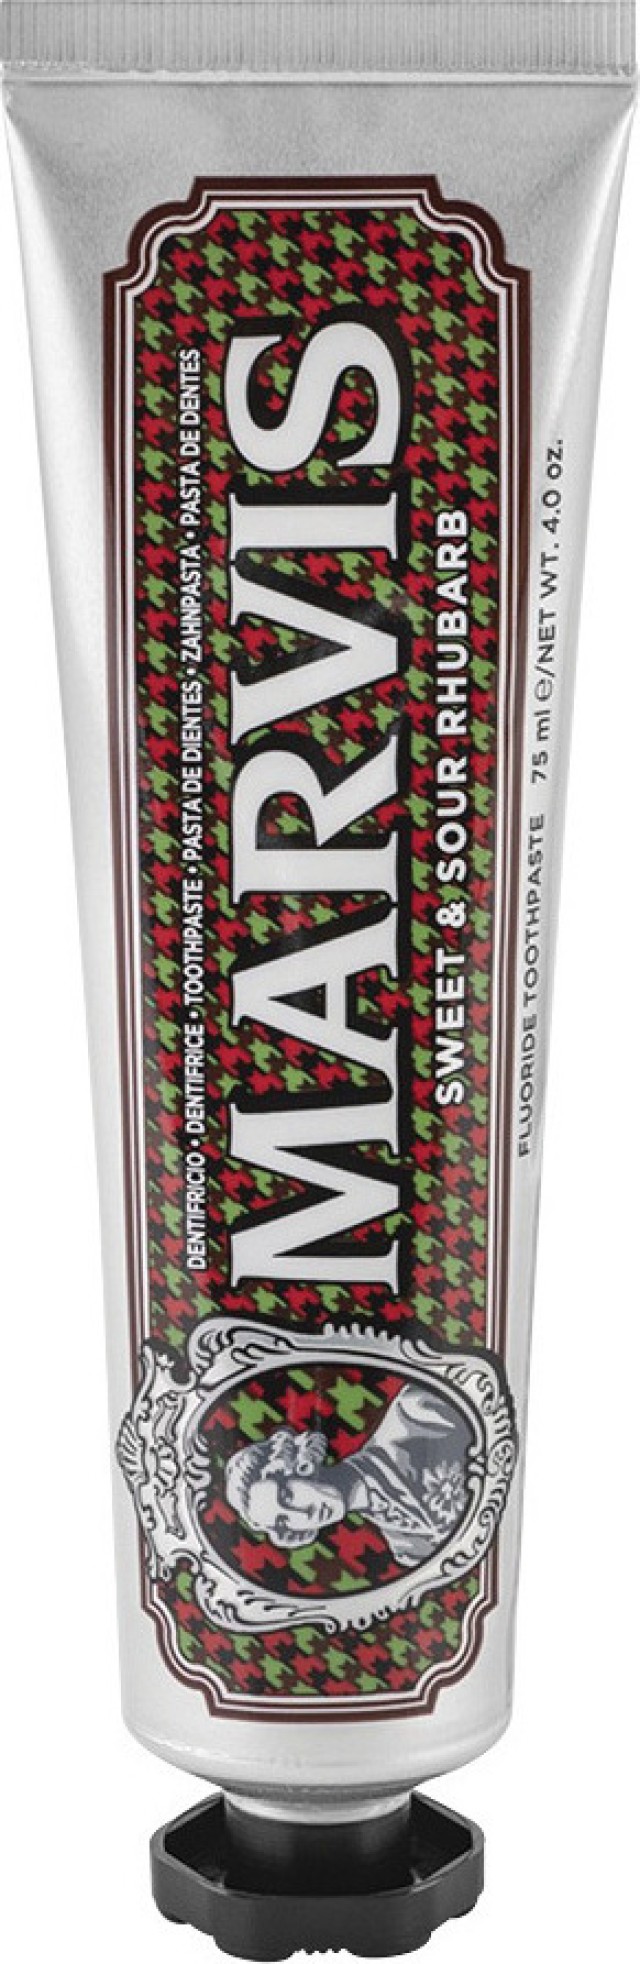 Marvis Sweet & Sour Rhubarb Toothpaste Οδοντόκρεμα με Γεύση από Γλυκό και Ξινό Ραβέντι 75ml